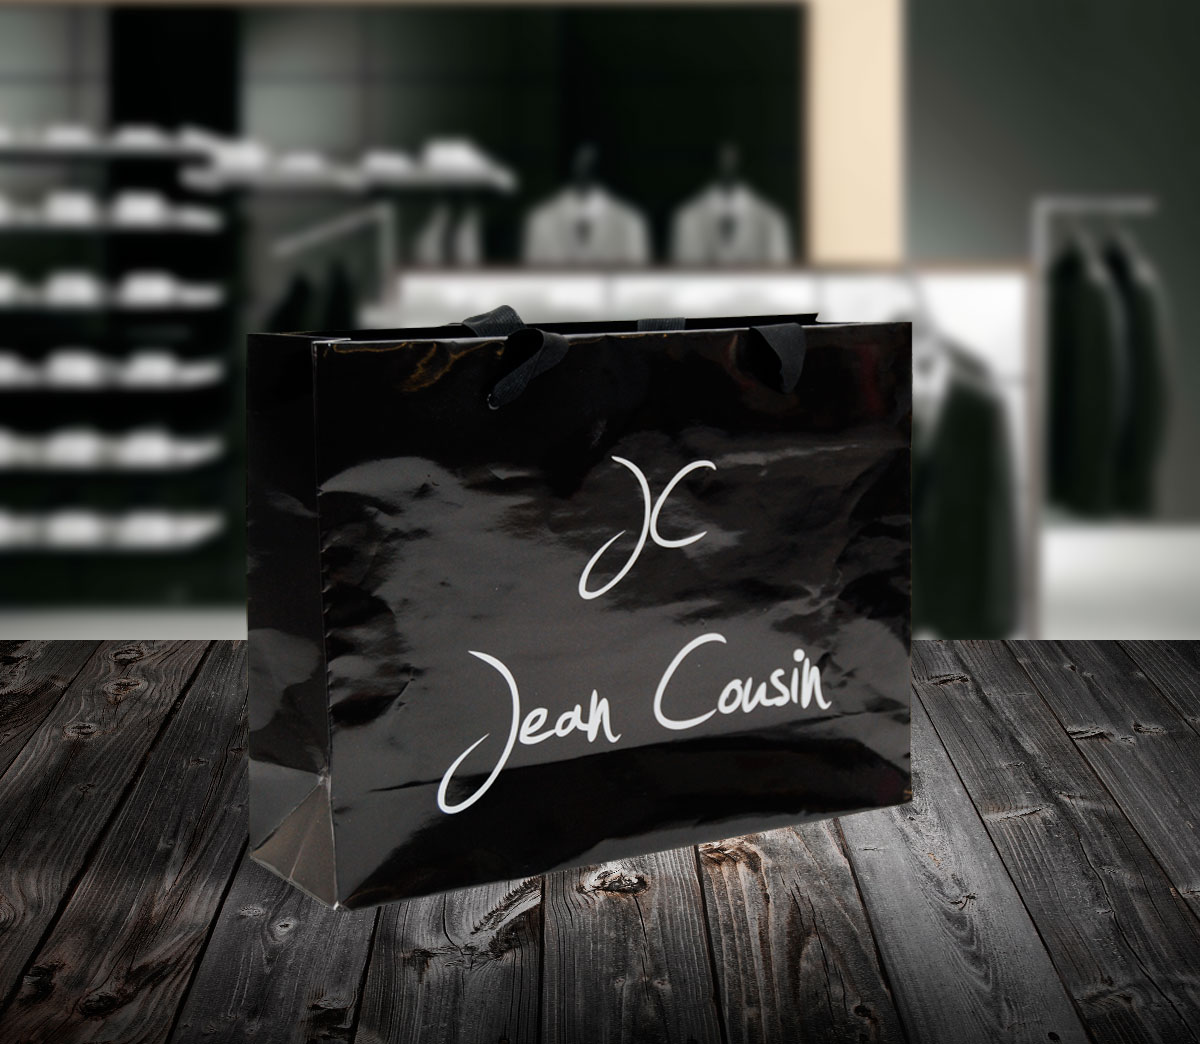 Jean Cousin busta shopper by Maniac Studio